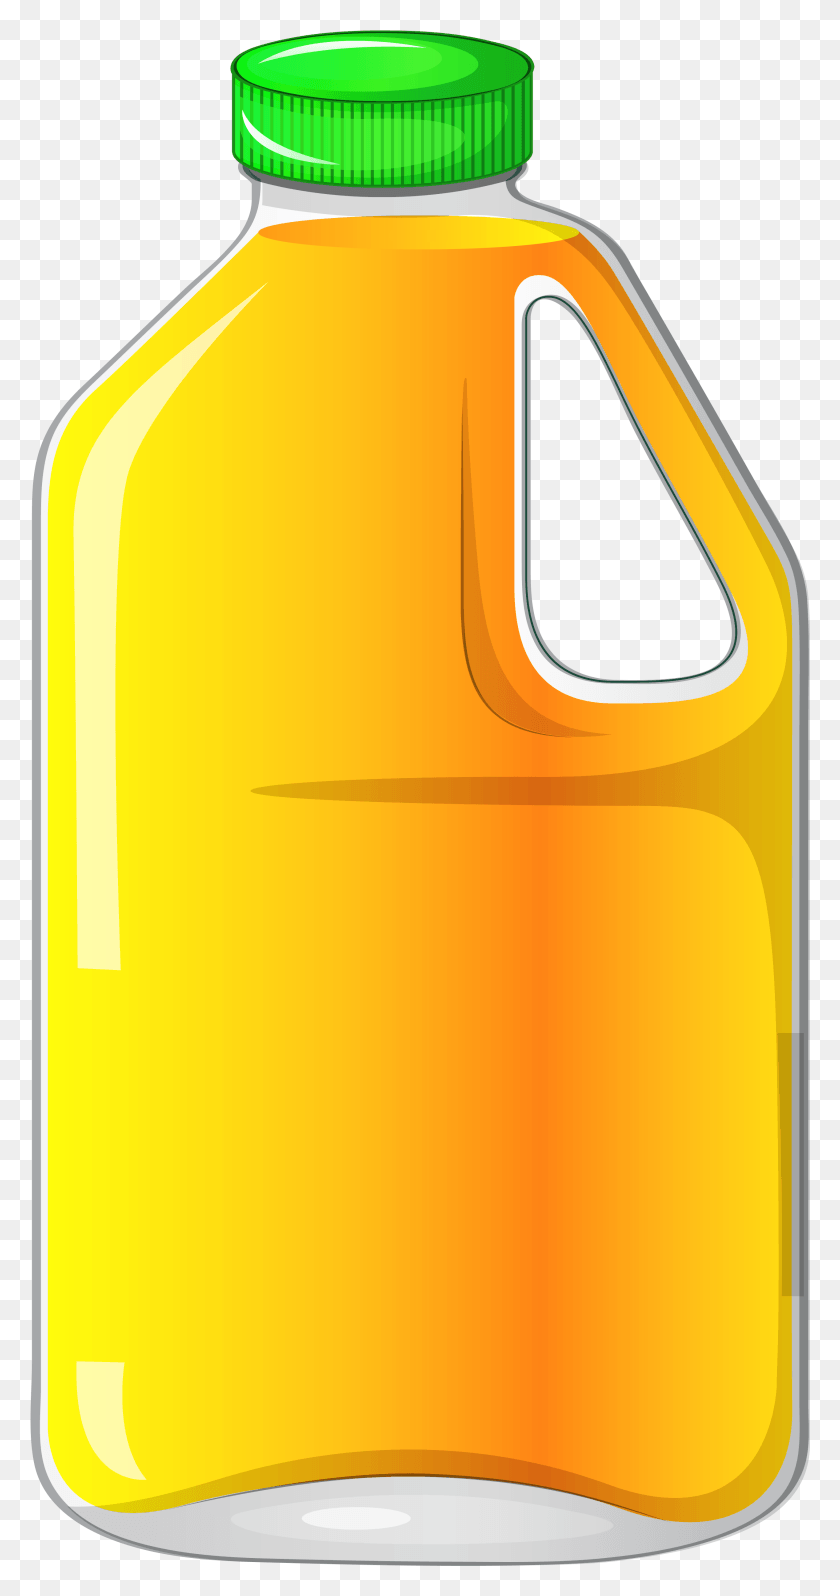 2535x4992 Bleach Clipart Plastic Jug Juice Bottle Clip Art, Beverage, Drink, Orange Juice HD PNG Download